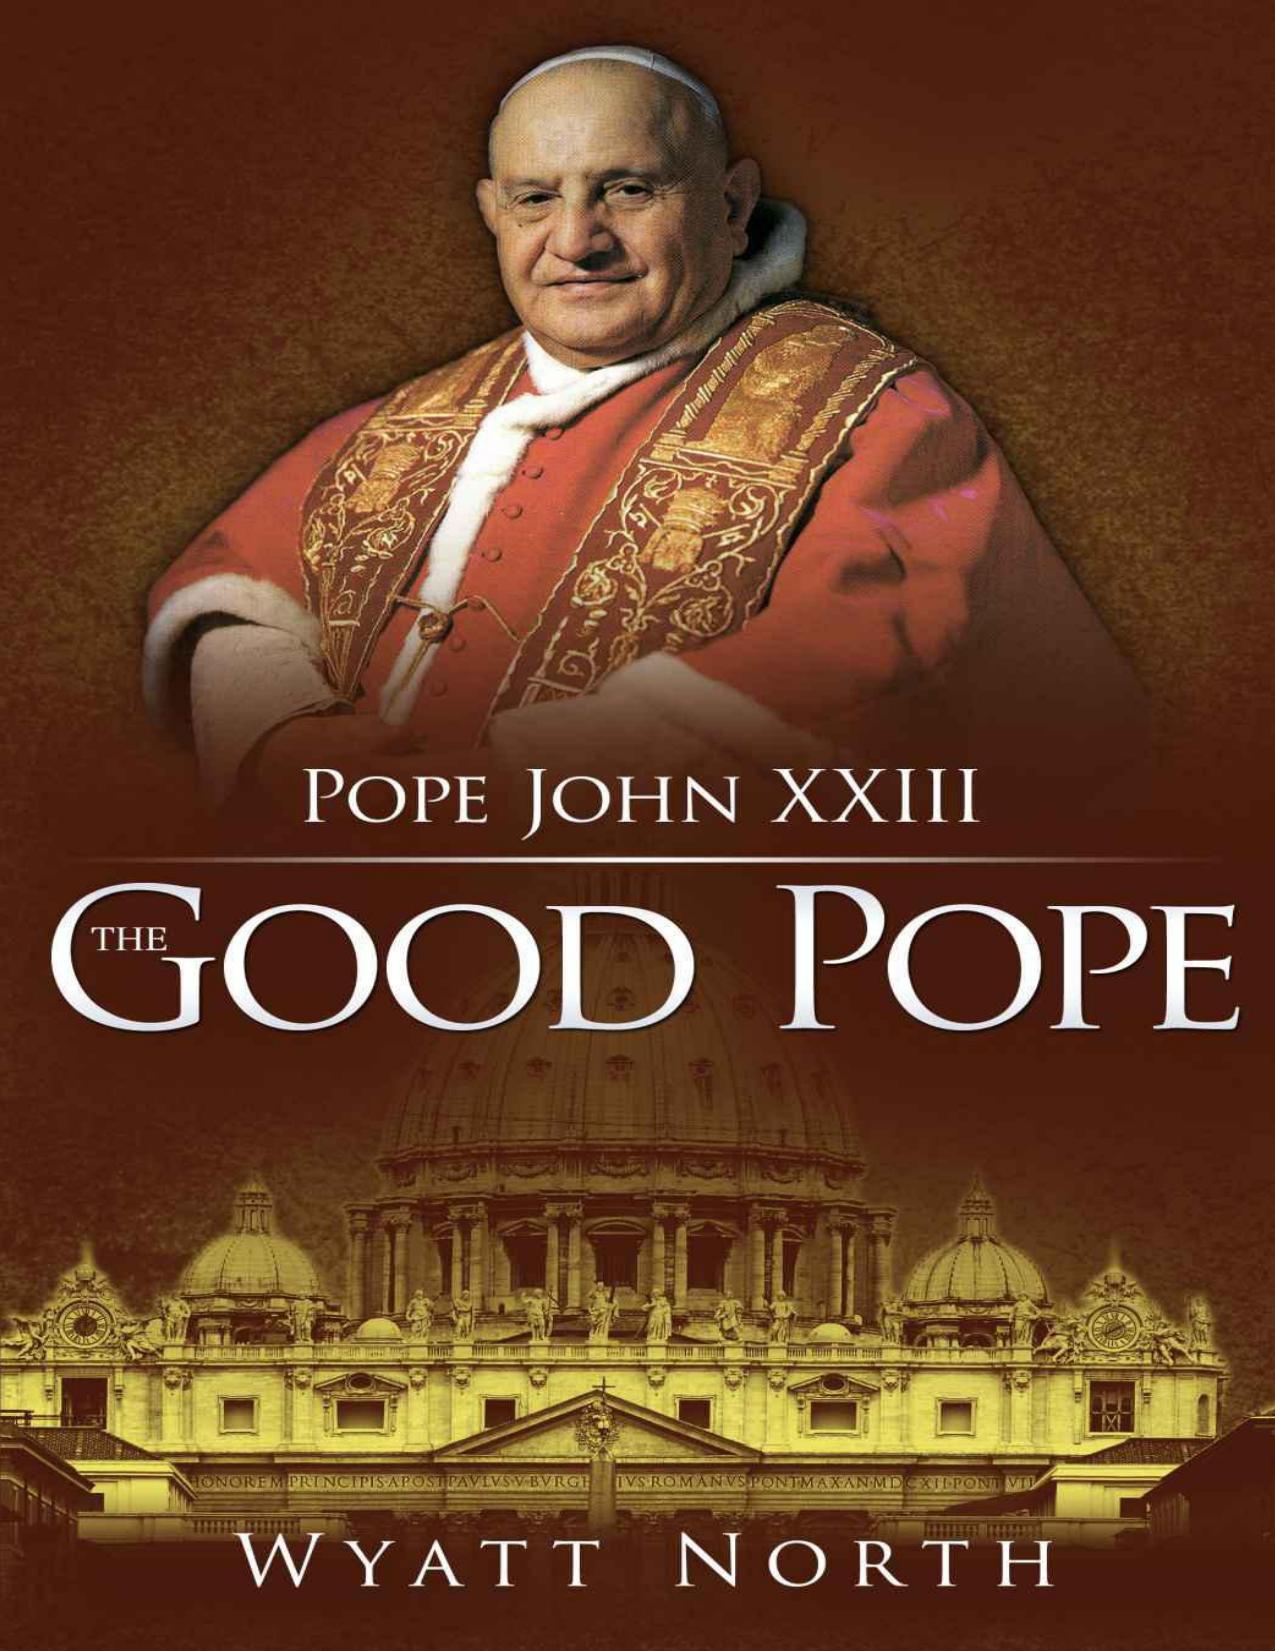 Pope John XXIII: The Good Pope by Wyatt North